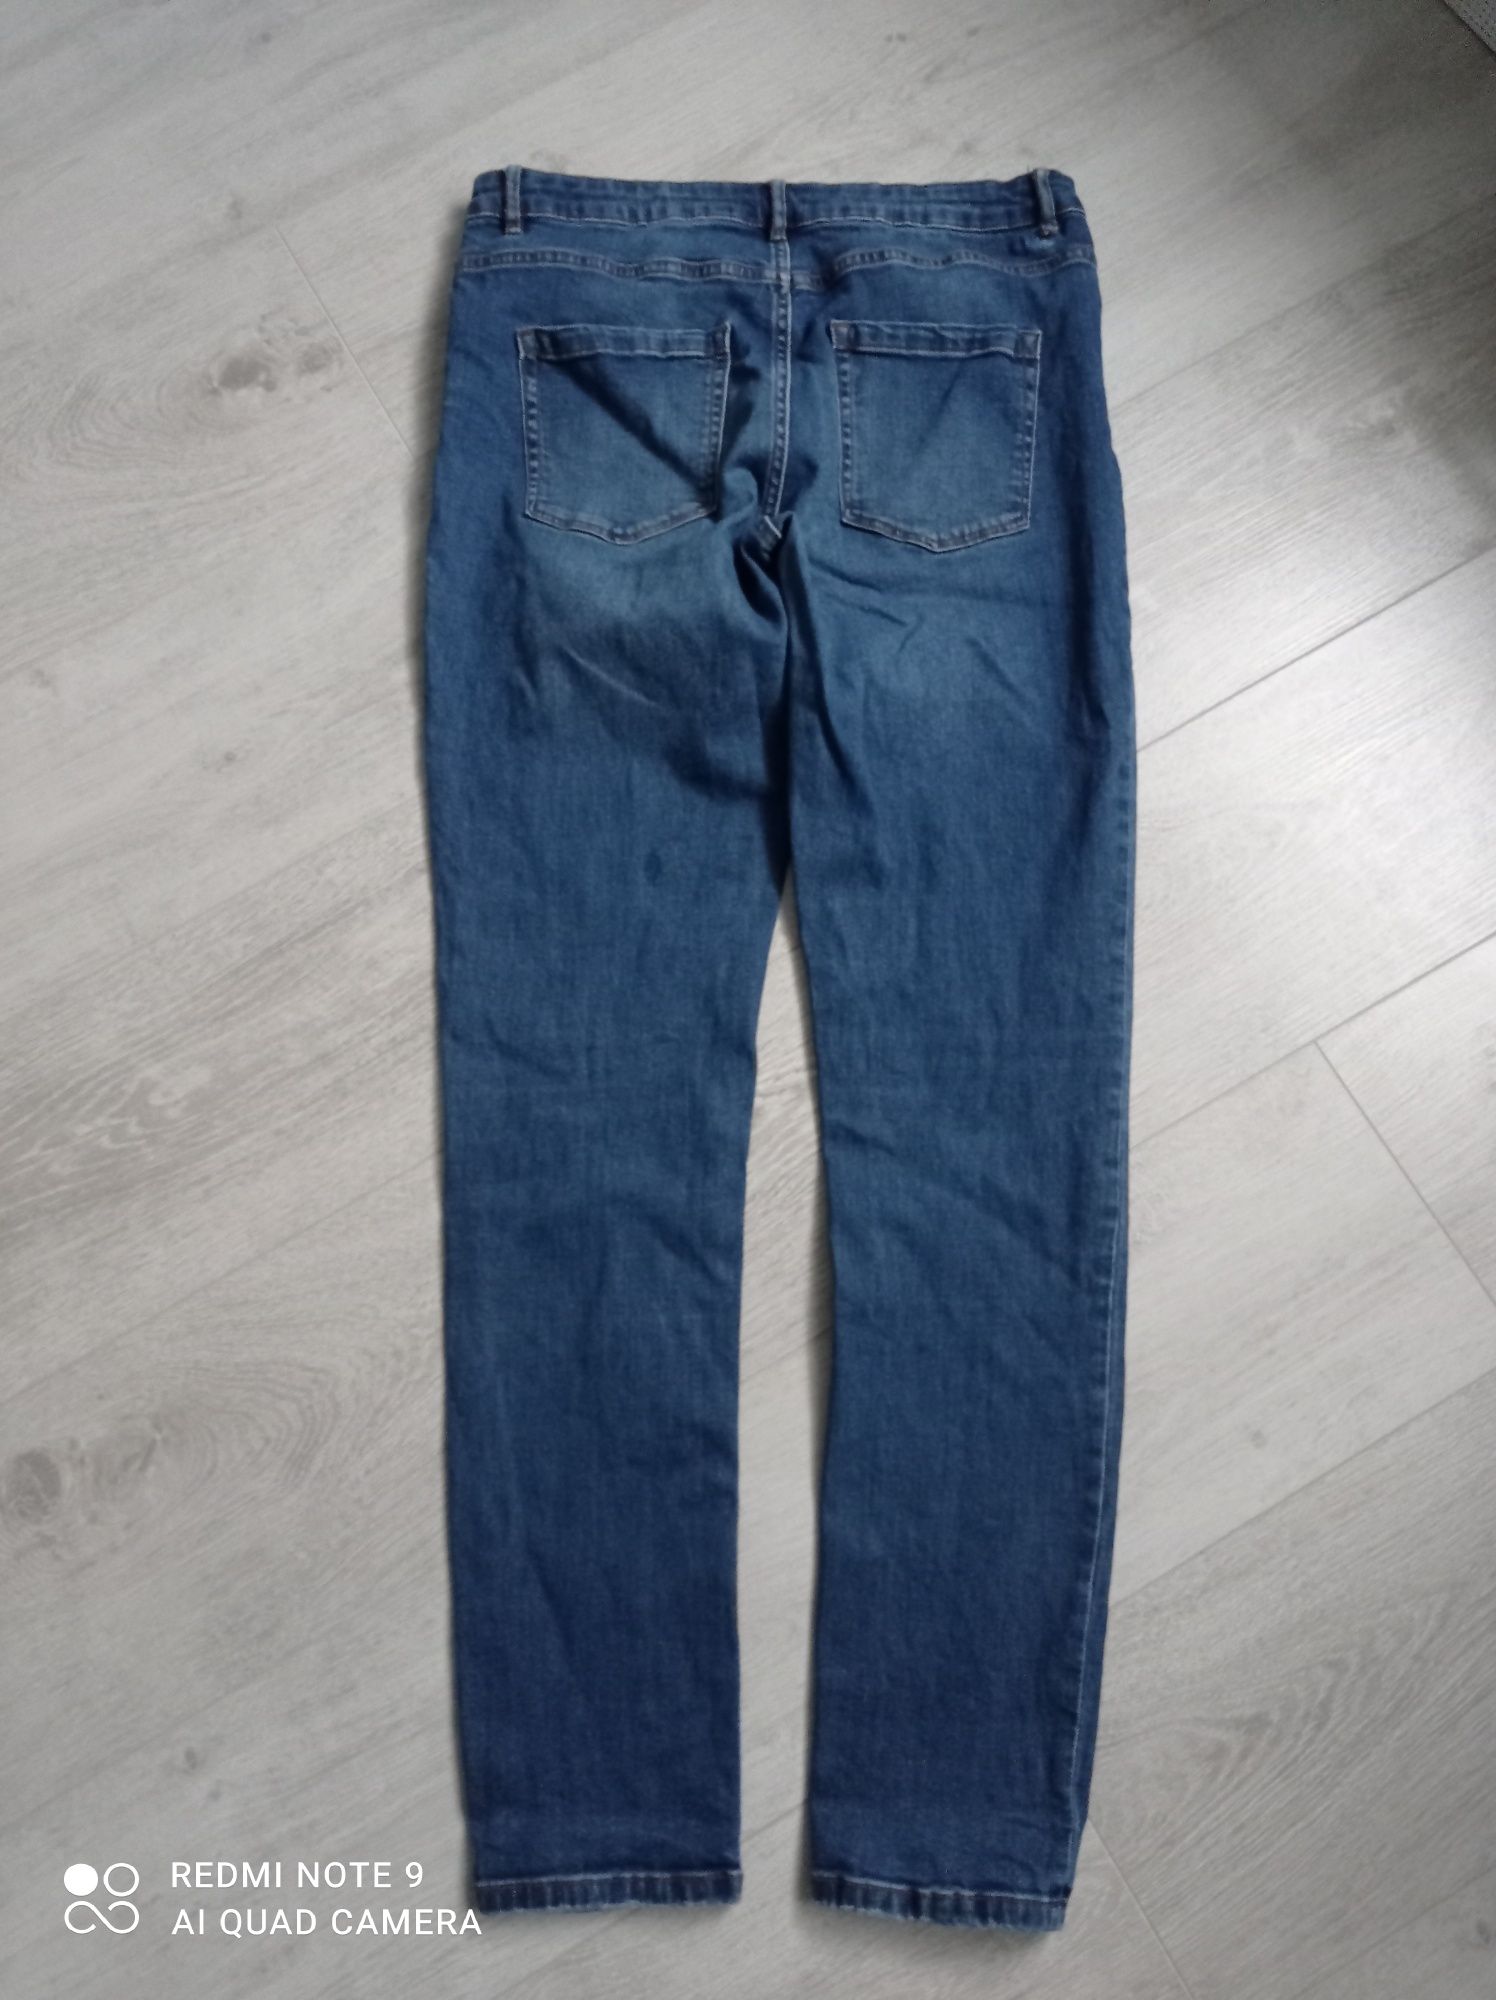 Spodnie damskie jeans. Rozmiar 42